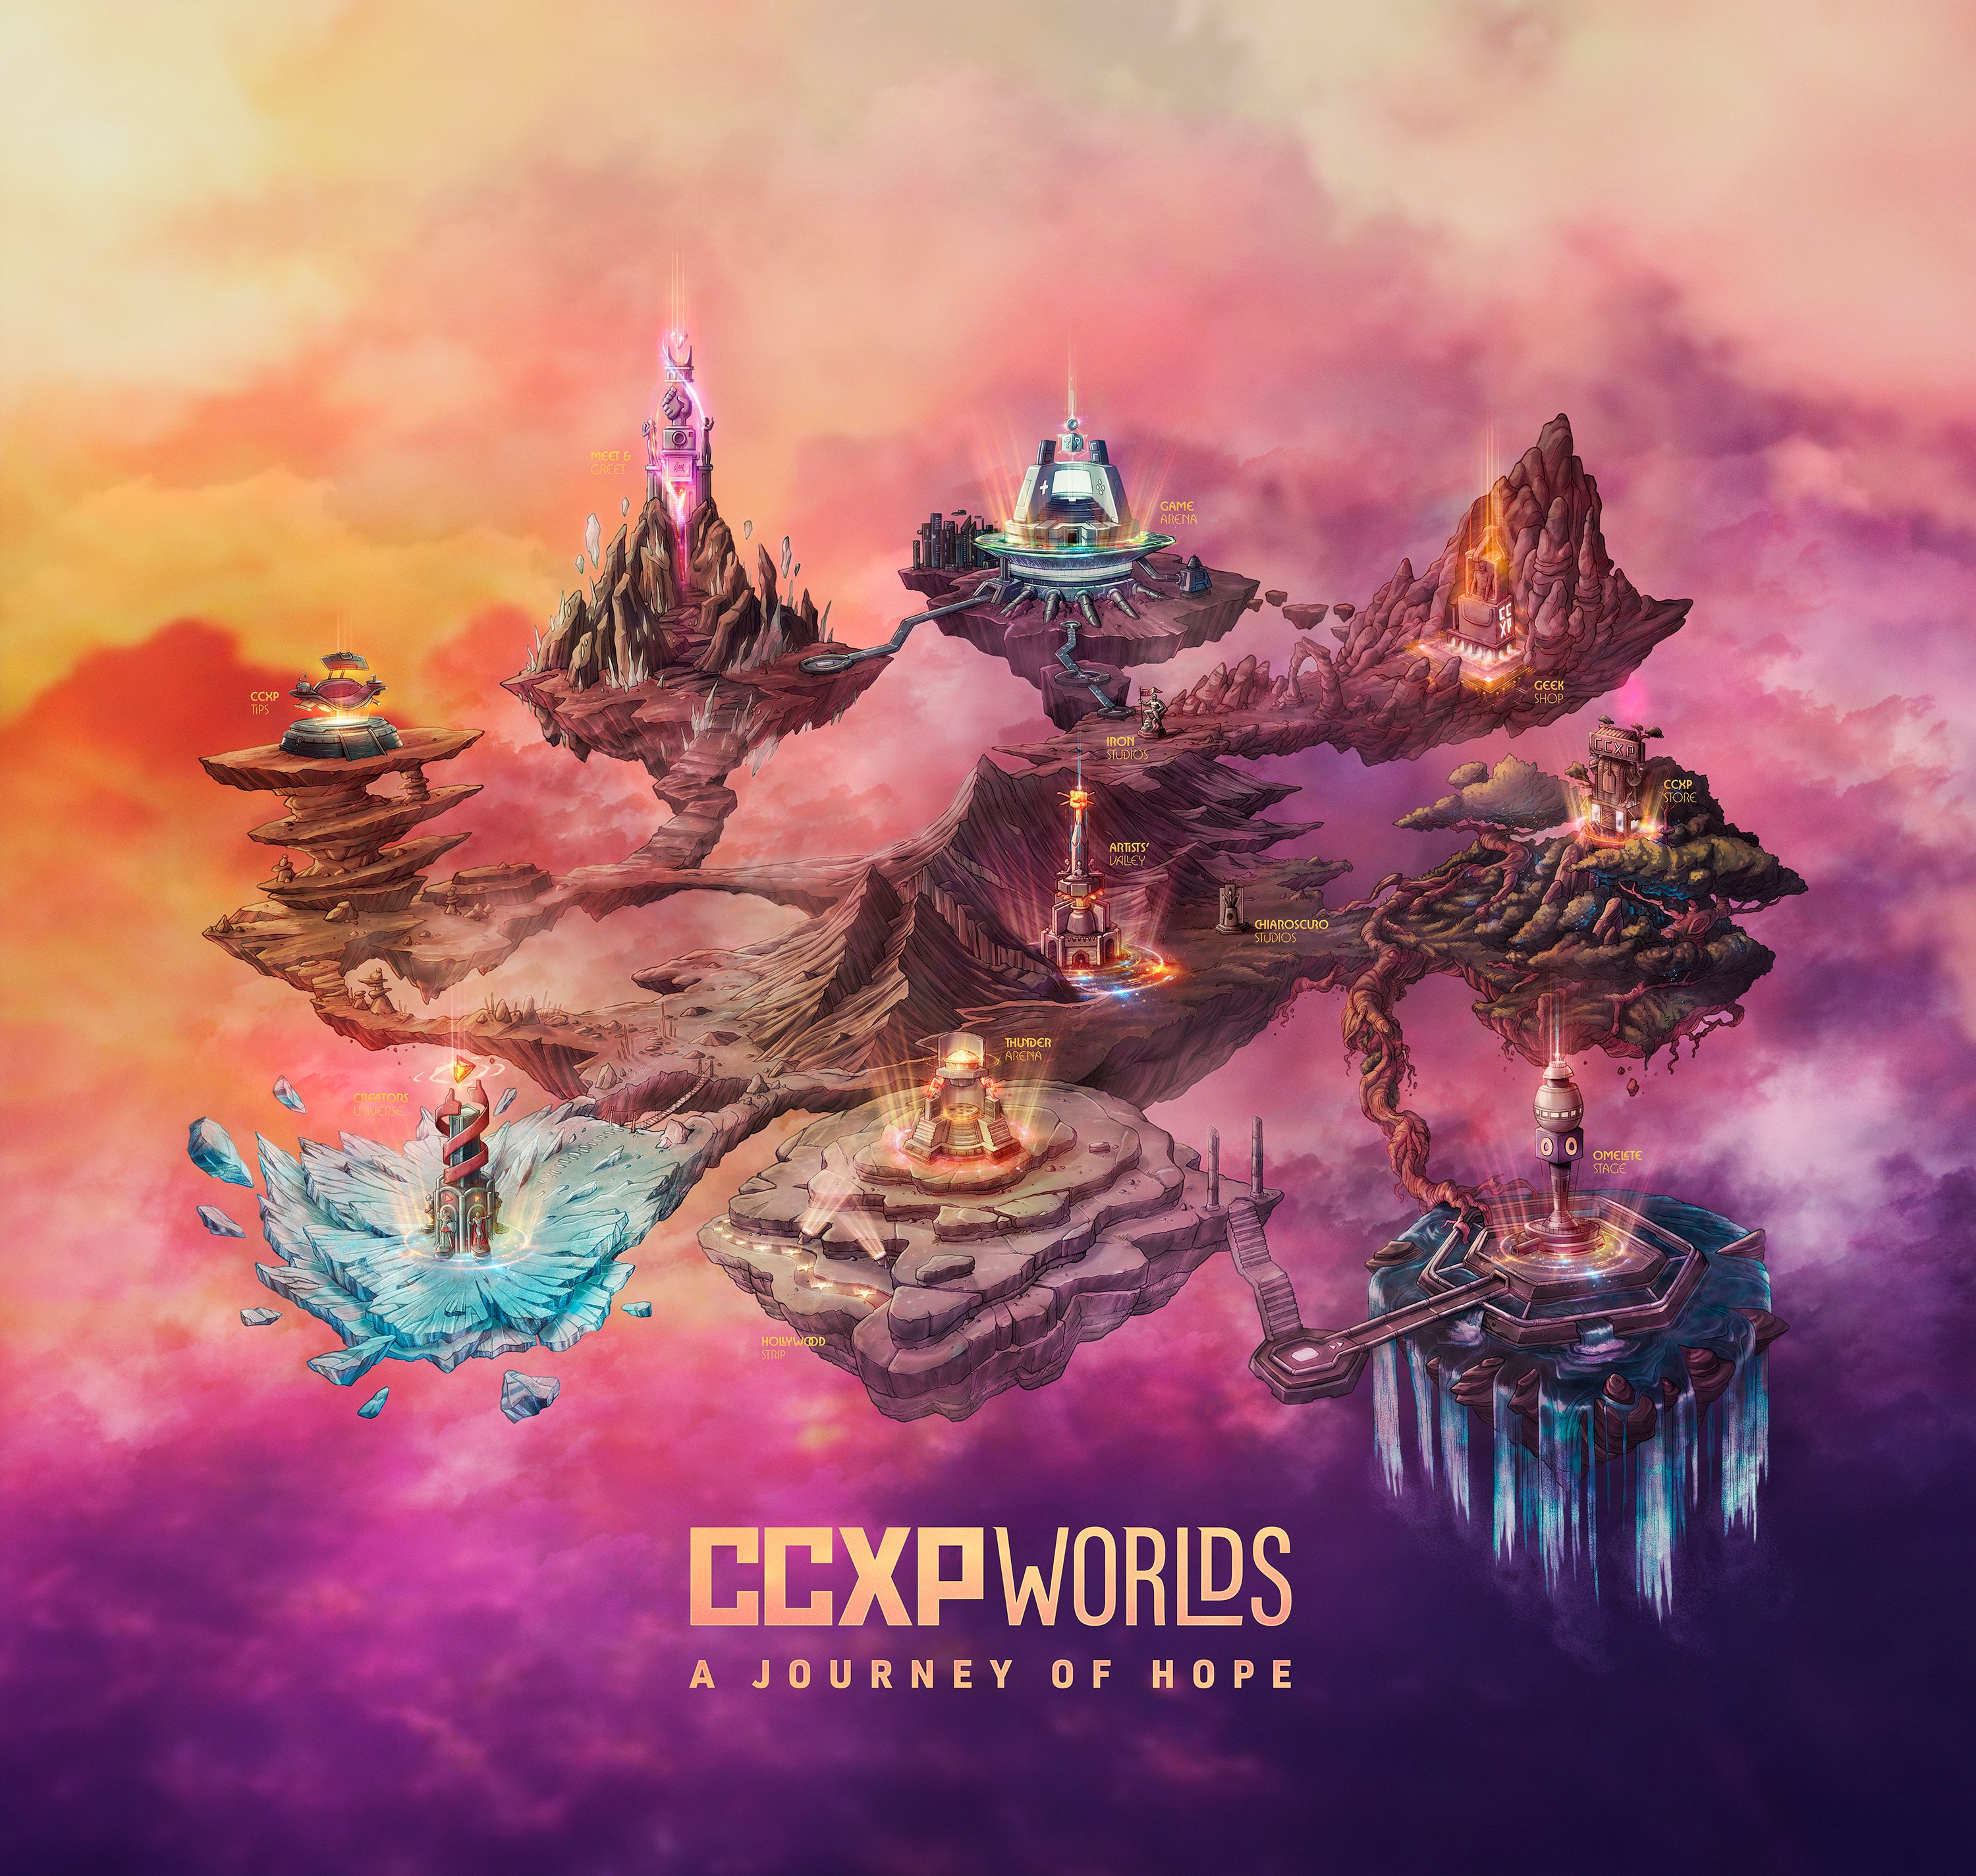 ccxp-worlds-image